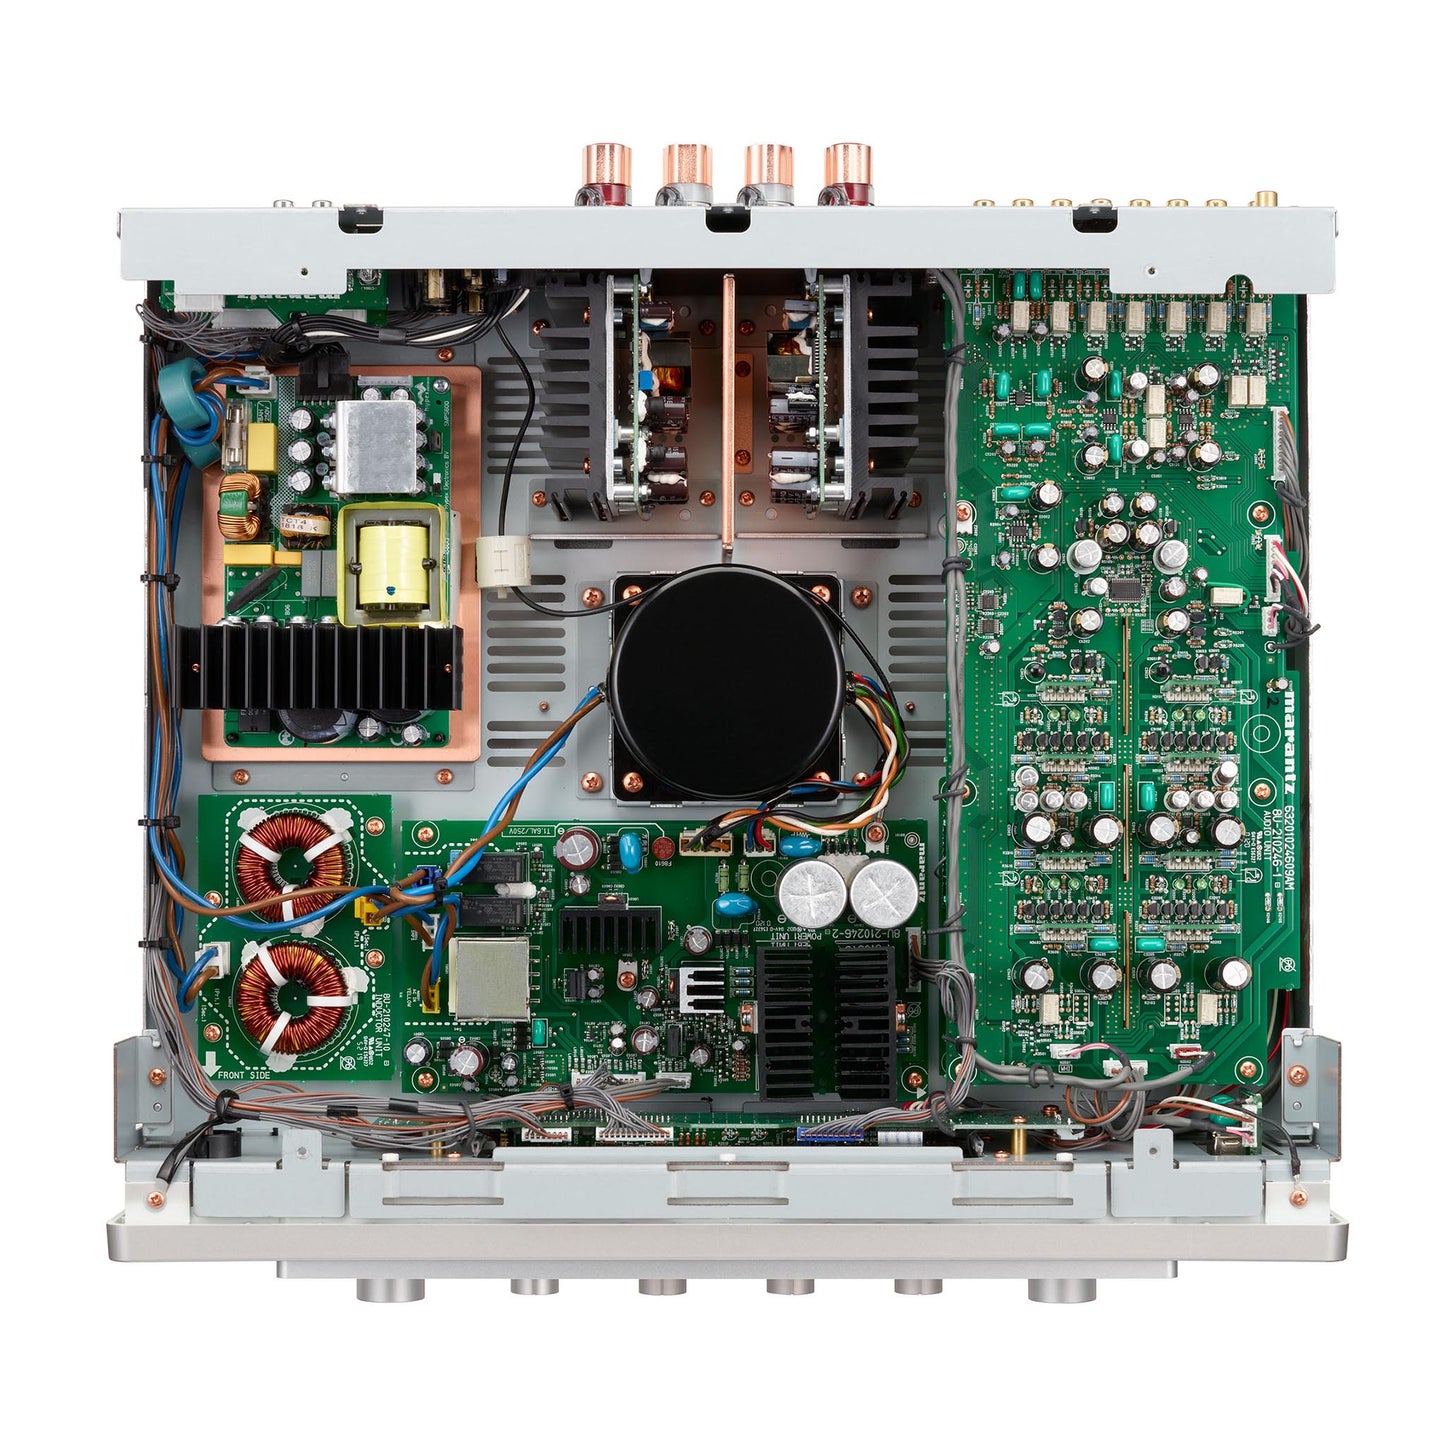 Marantz MODEL 30 Integrated Amplifier